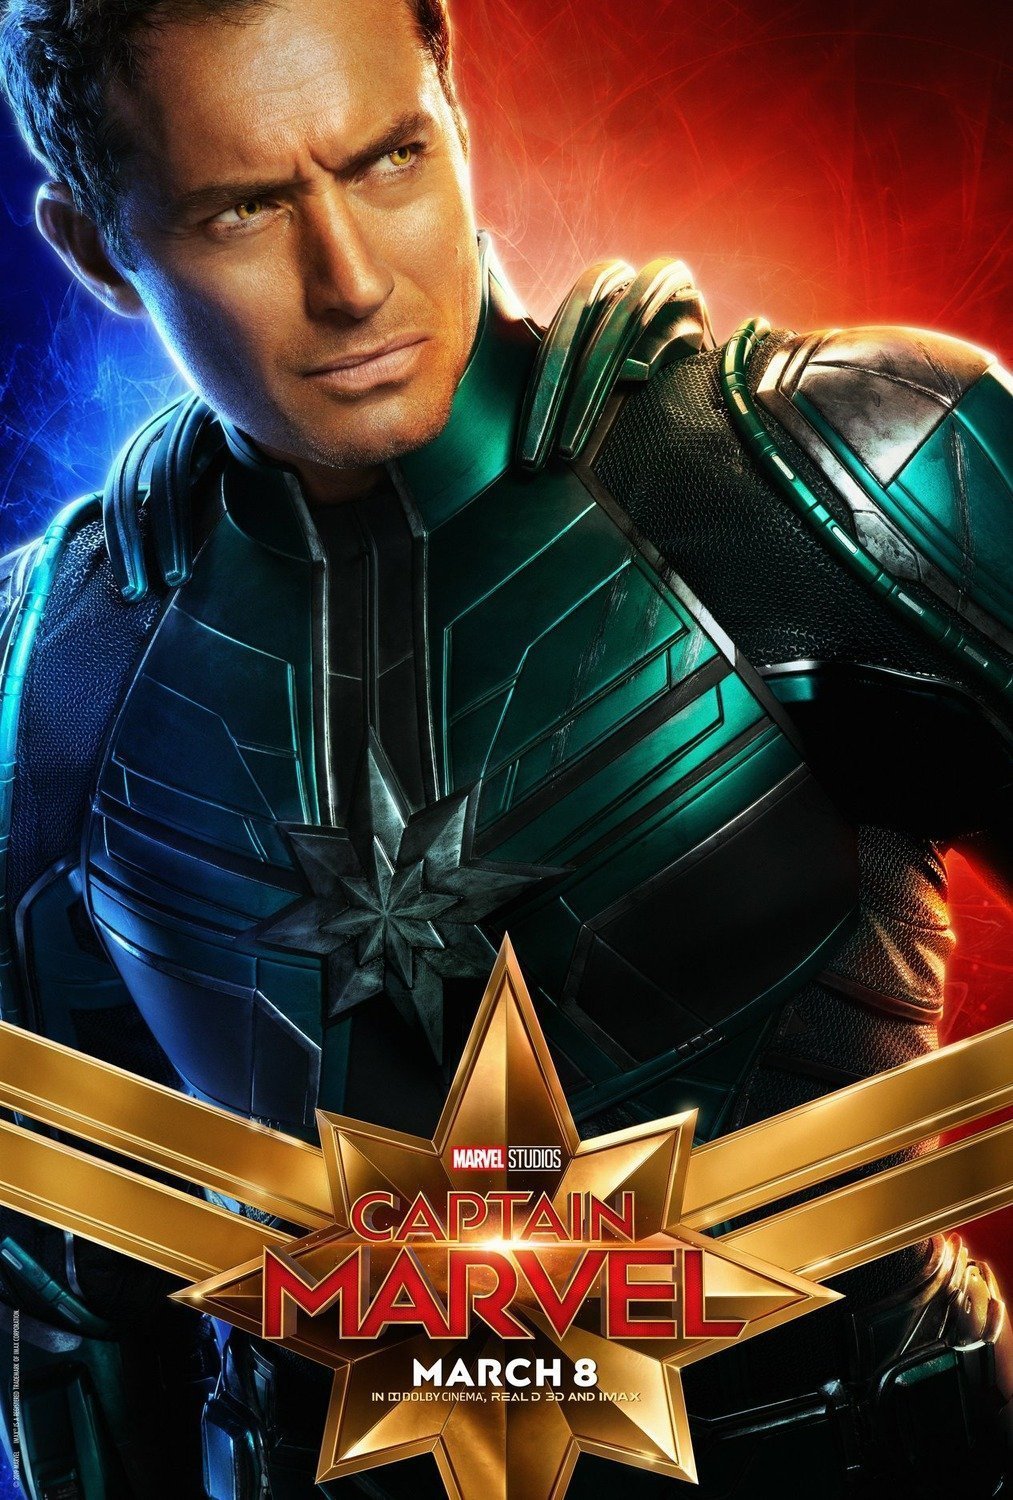 Poster du film Captain Marvel avec Jude Law (Yon-Rogg)